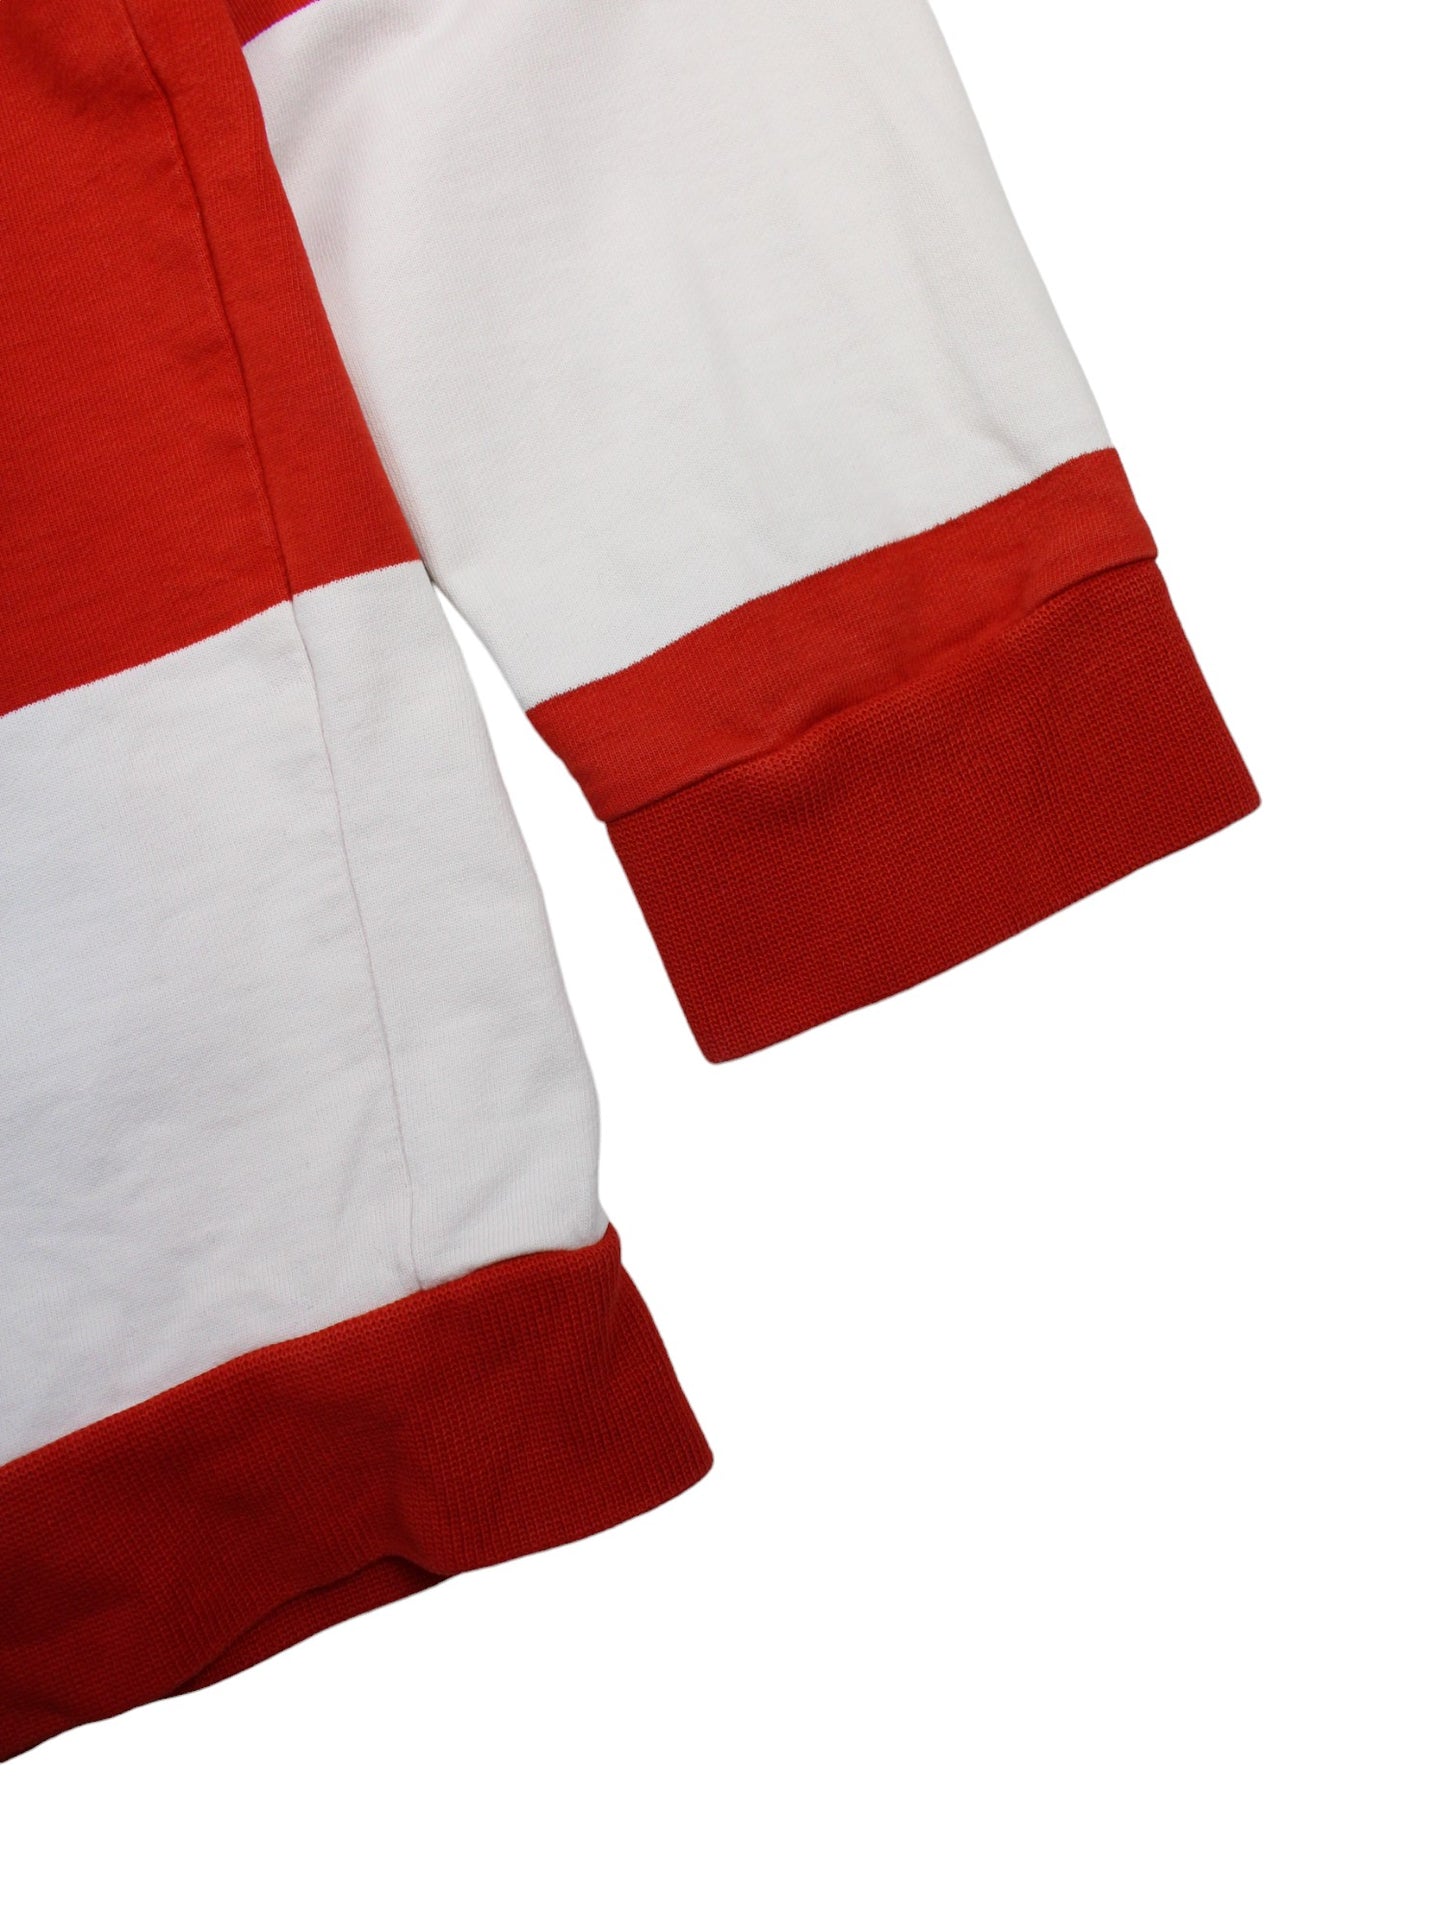 Lacoste White/Red 1/4 Zip Sweatshirt (M)